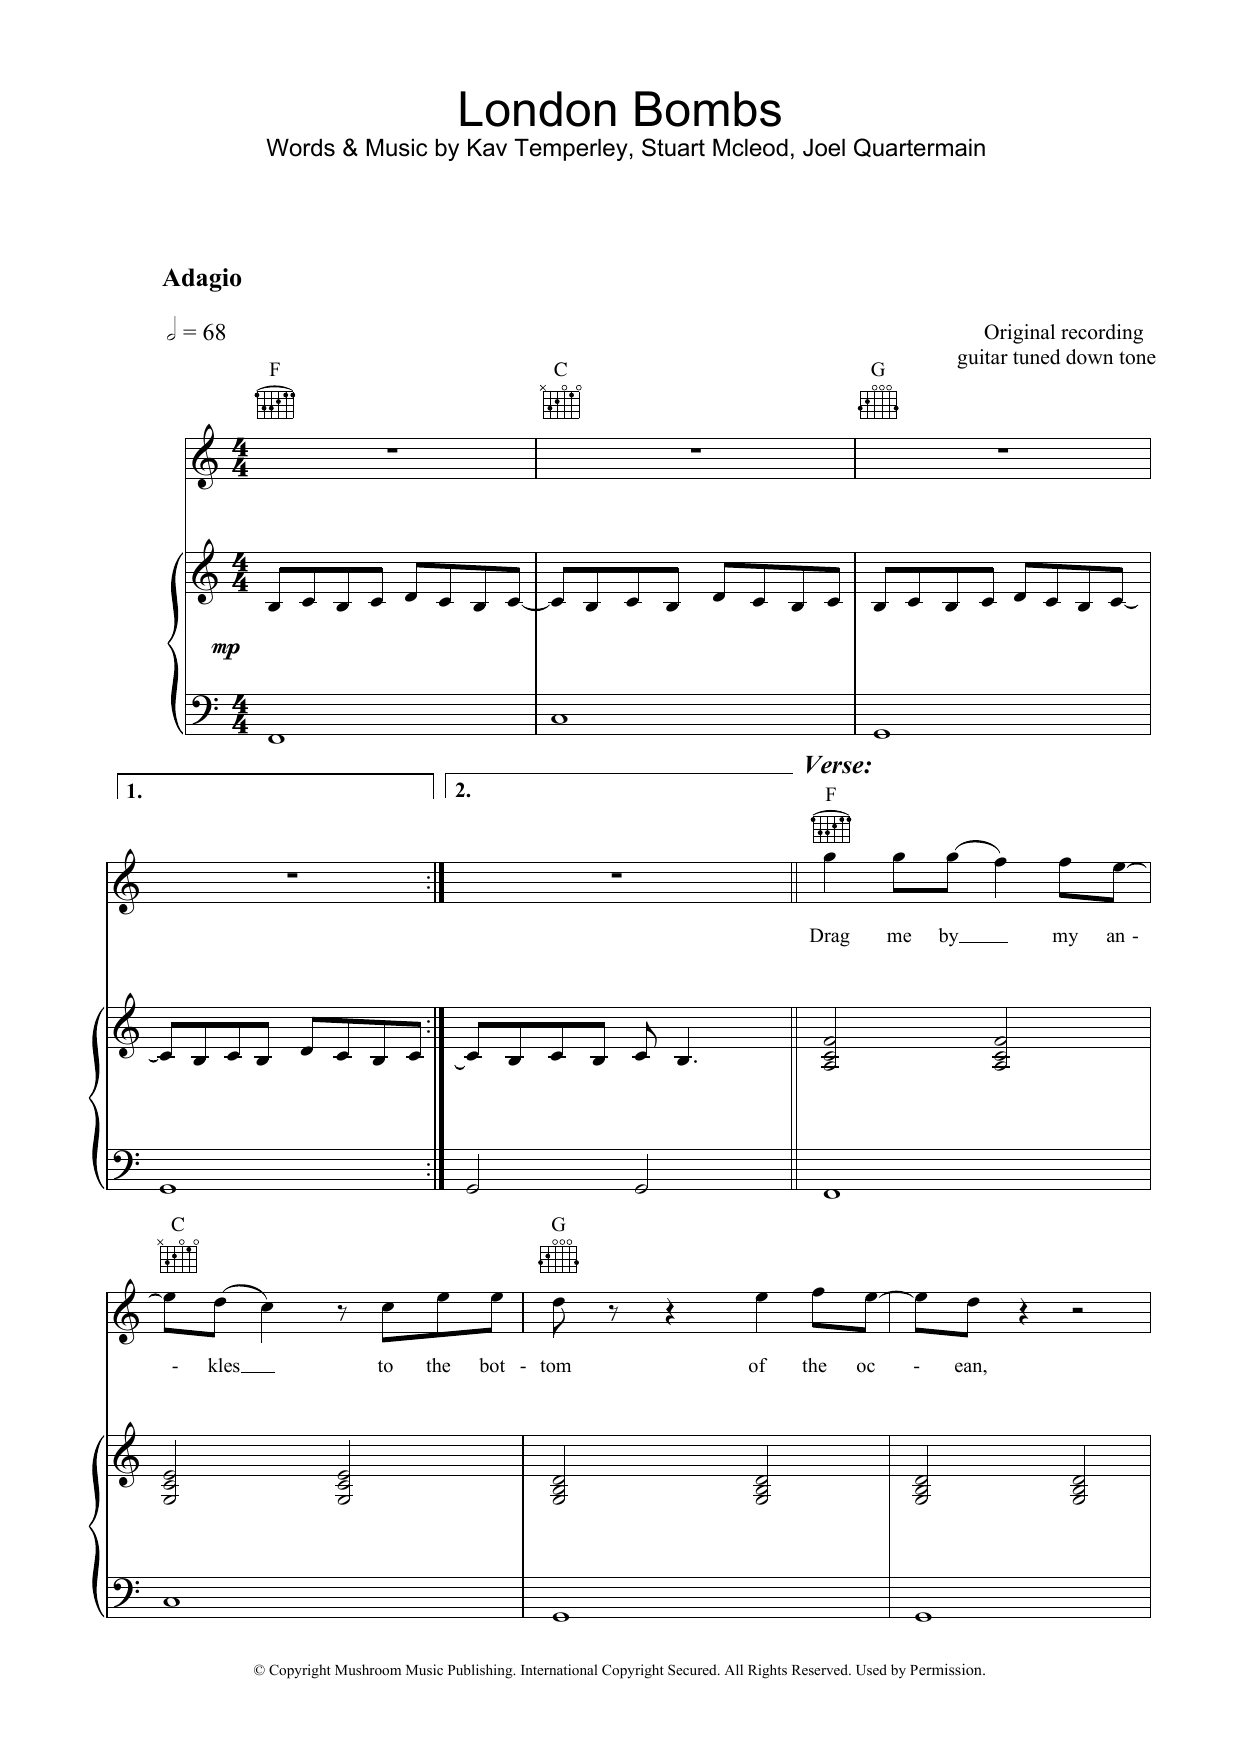 Eskimo Joe London Bombs Sheet Music Notes & Chords for Piano, Vocal & Guitar - Download or Print PDF